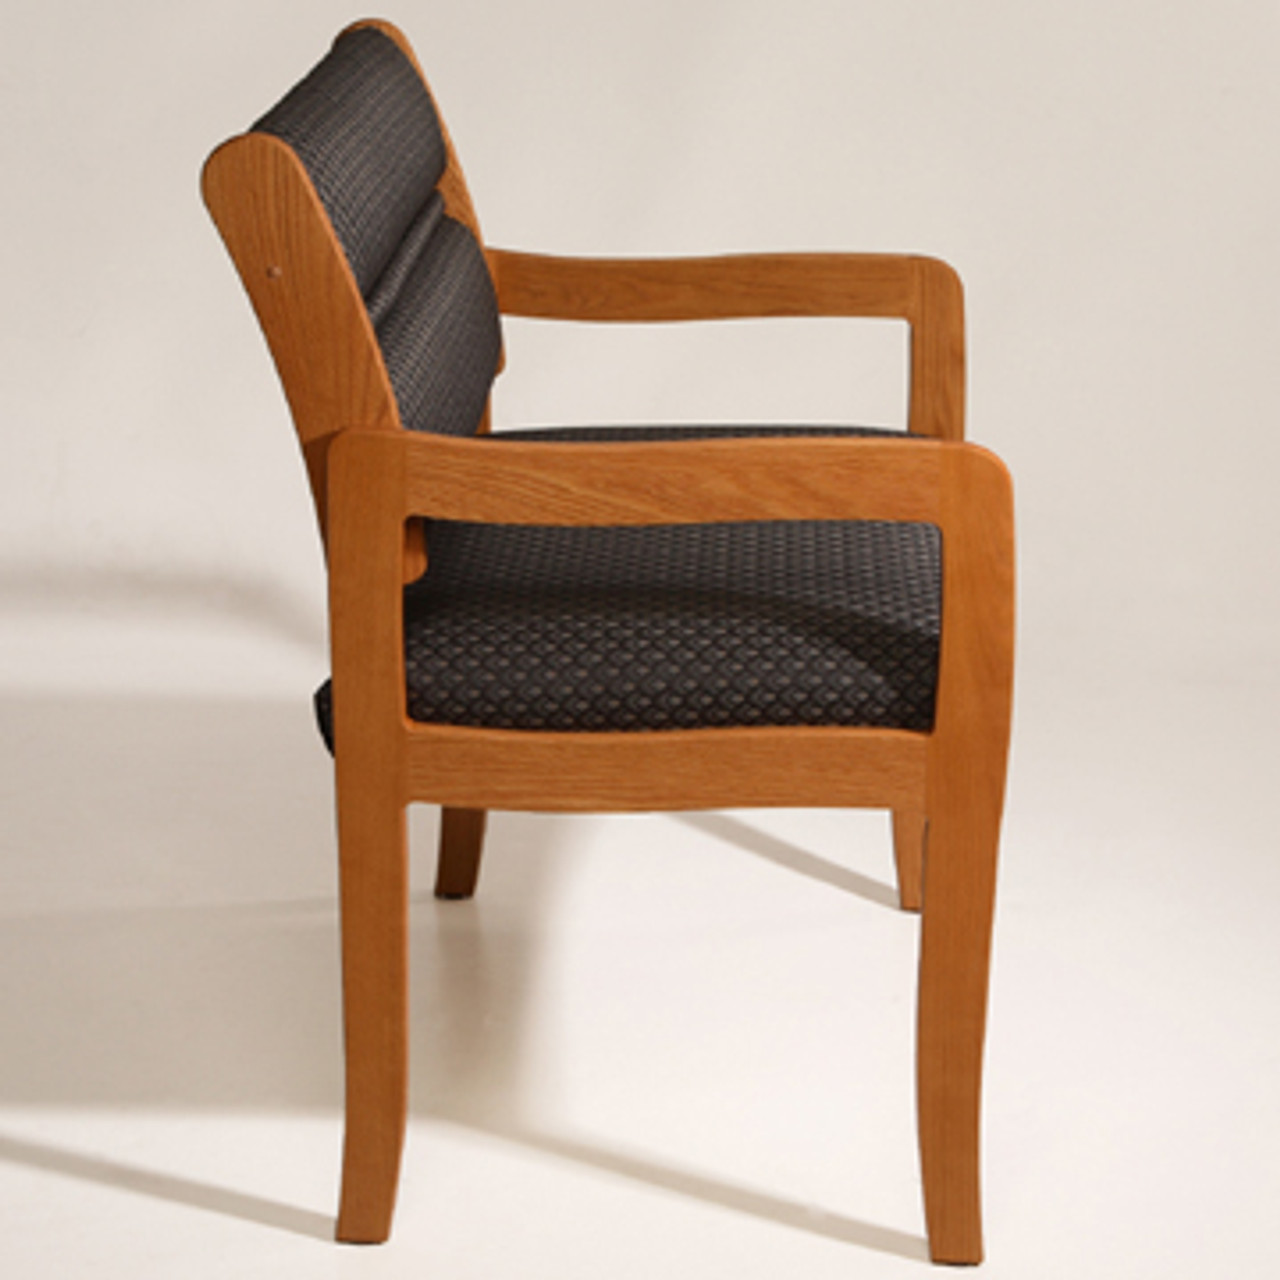 Wooden Mallet Valley Collection Three Seat Bariatric Chair, Center Arms, Standard Leg, Leaf Wine, Medium Oak